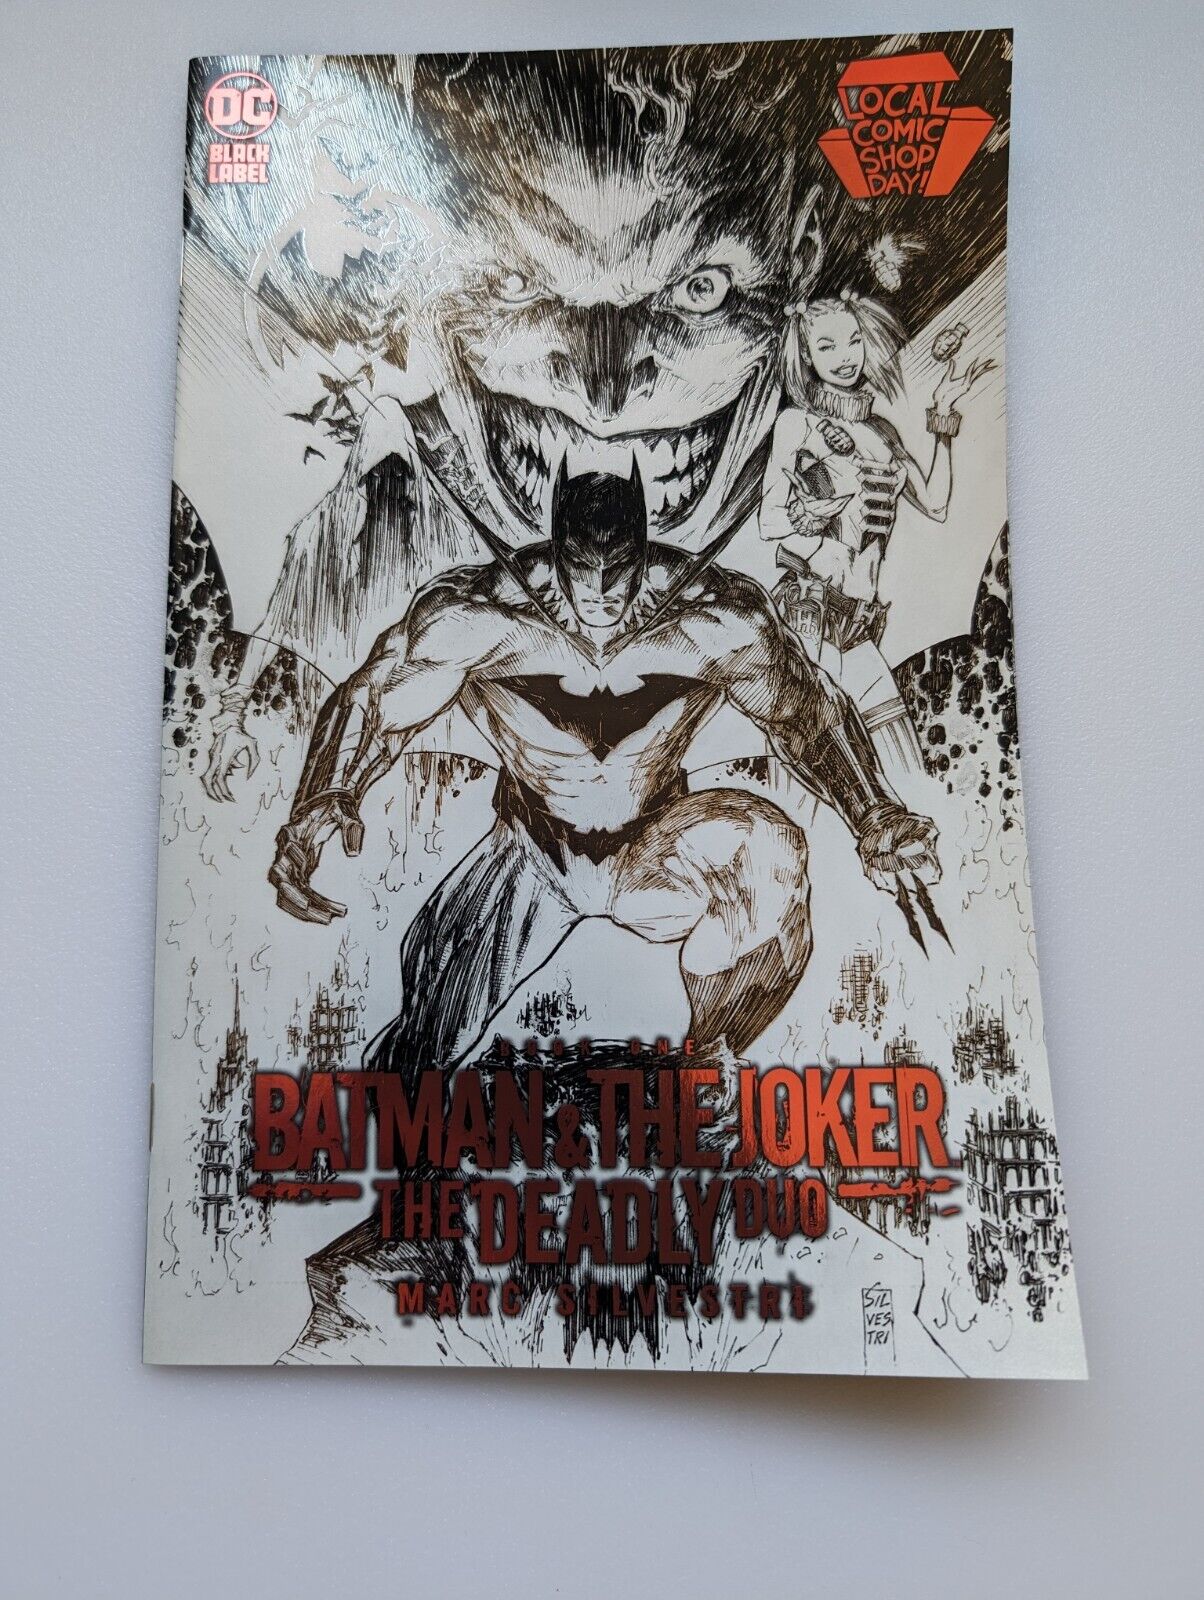 BATMAN THE JOKER DEADLY DUO #1 LCSD FOIL LOCAL COMIC SHOP DAY COVER